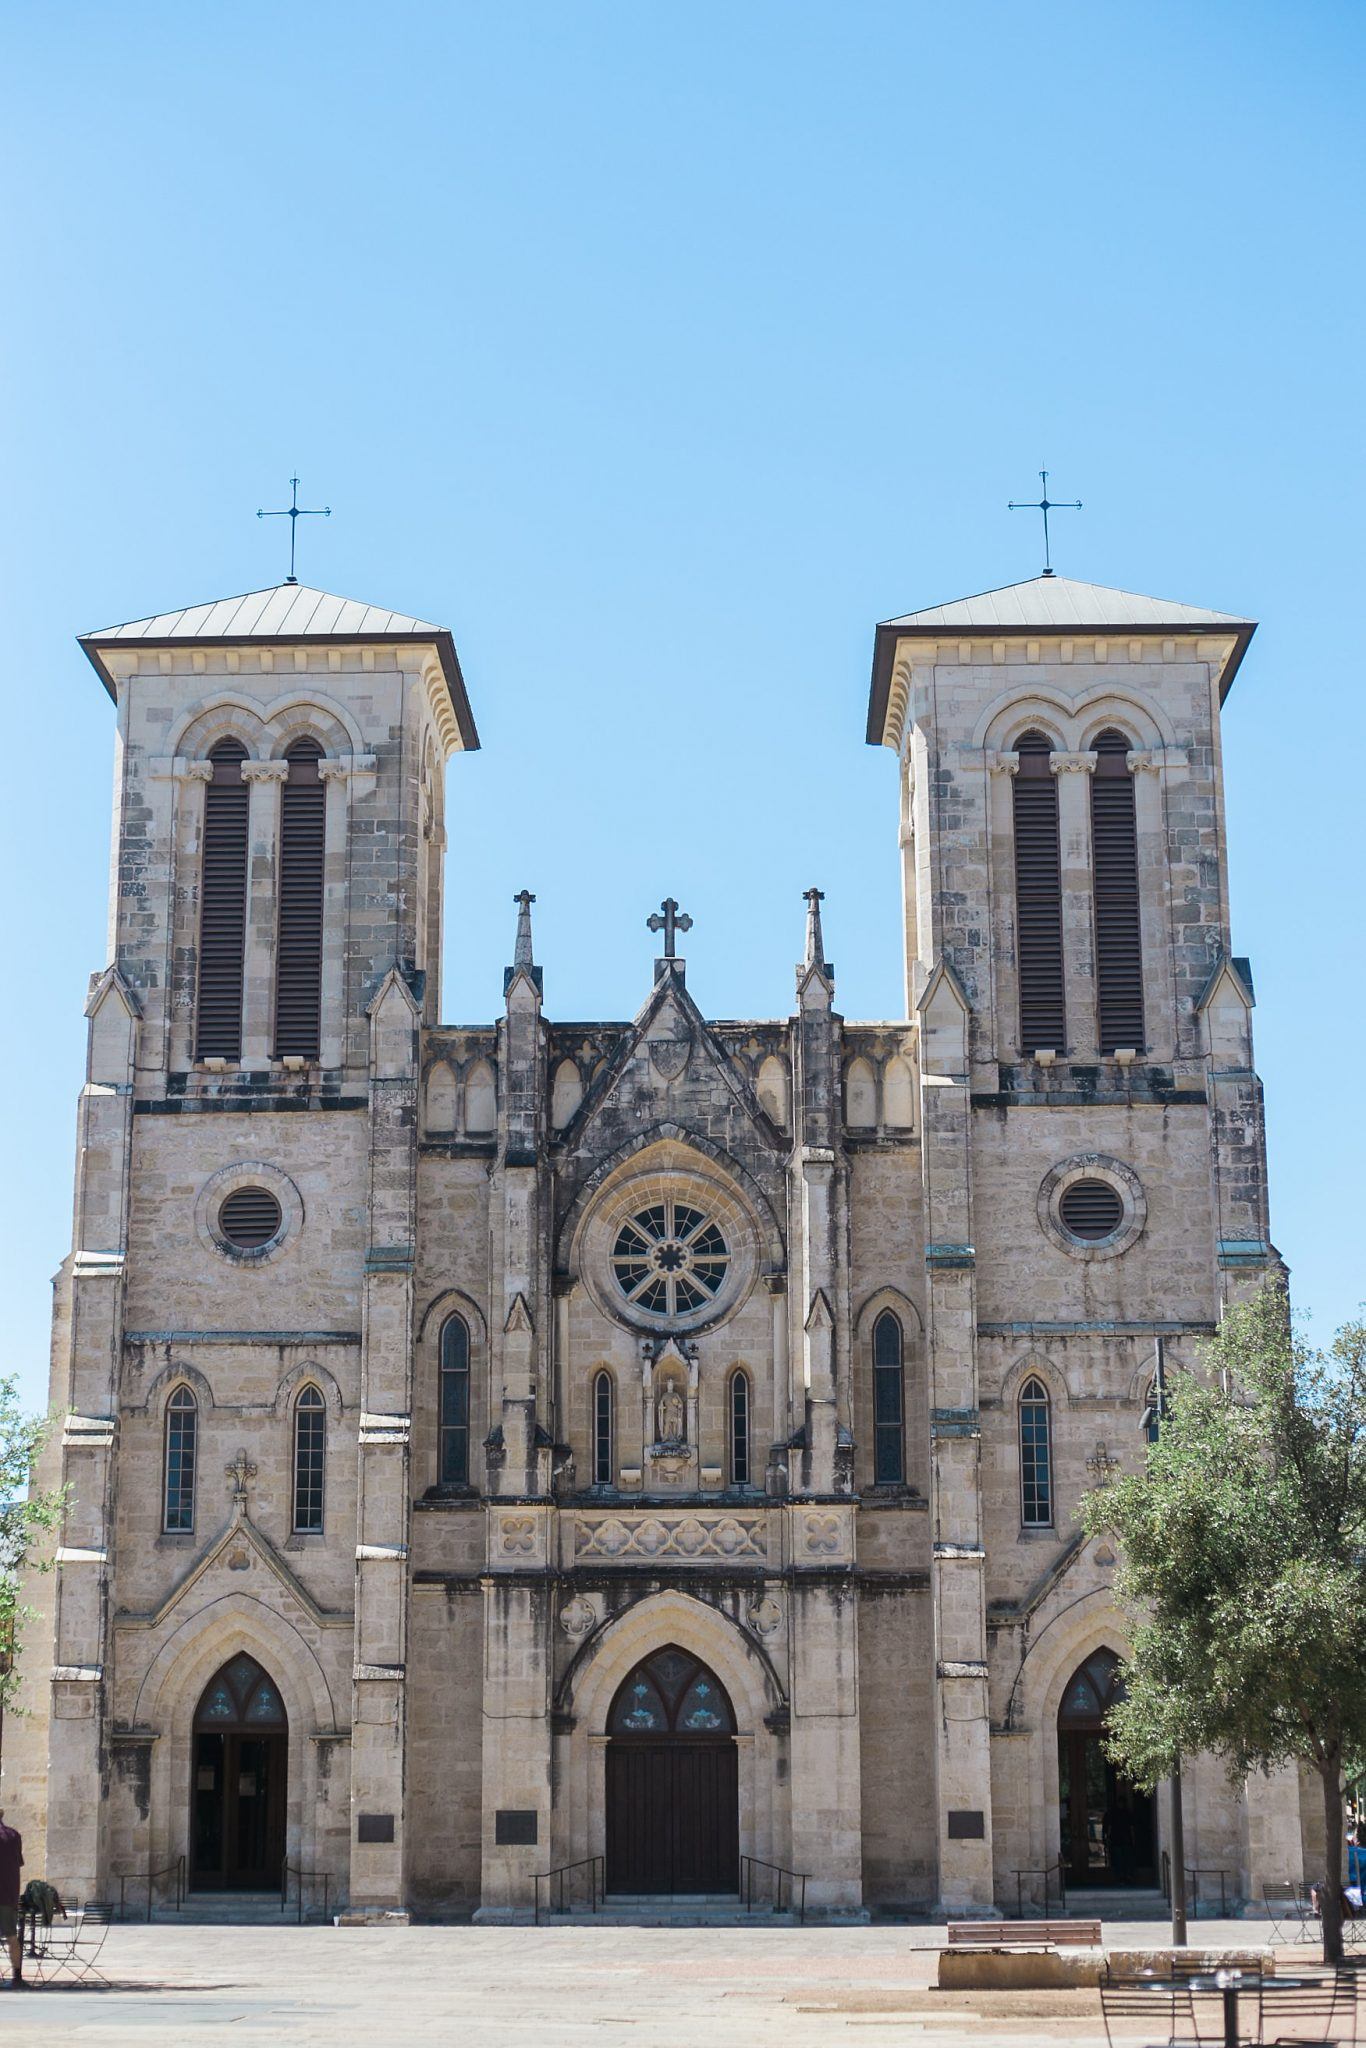 Oldest church in texas is in San Antonio